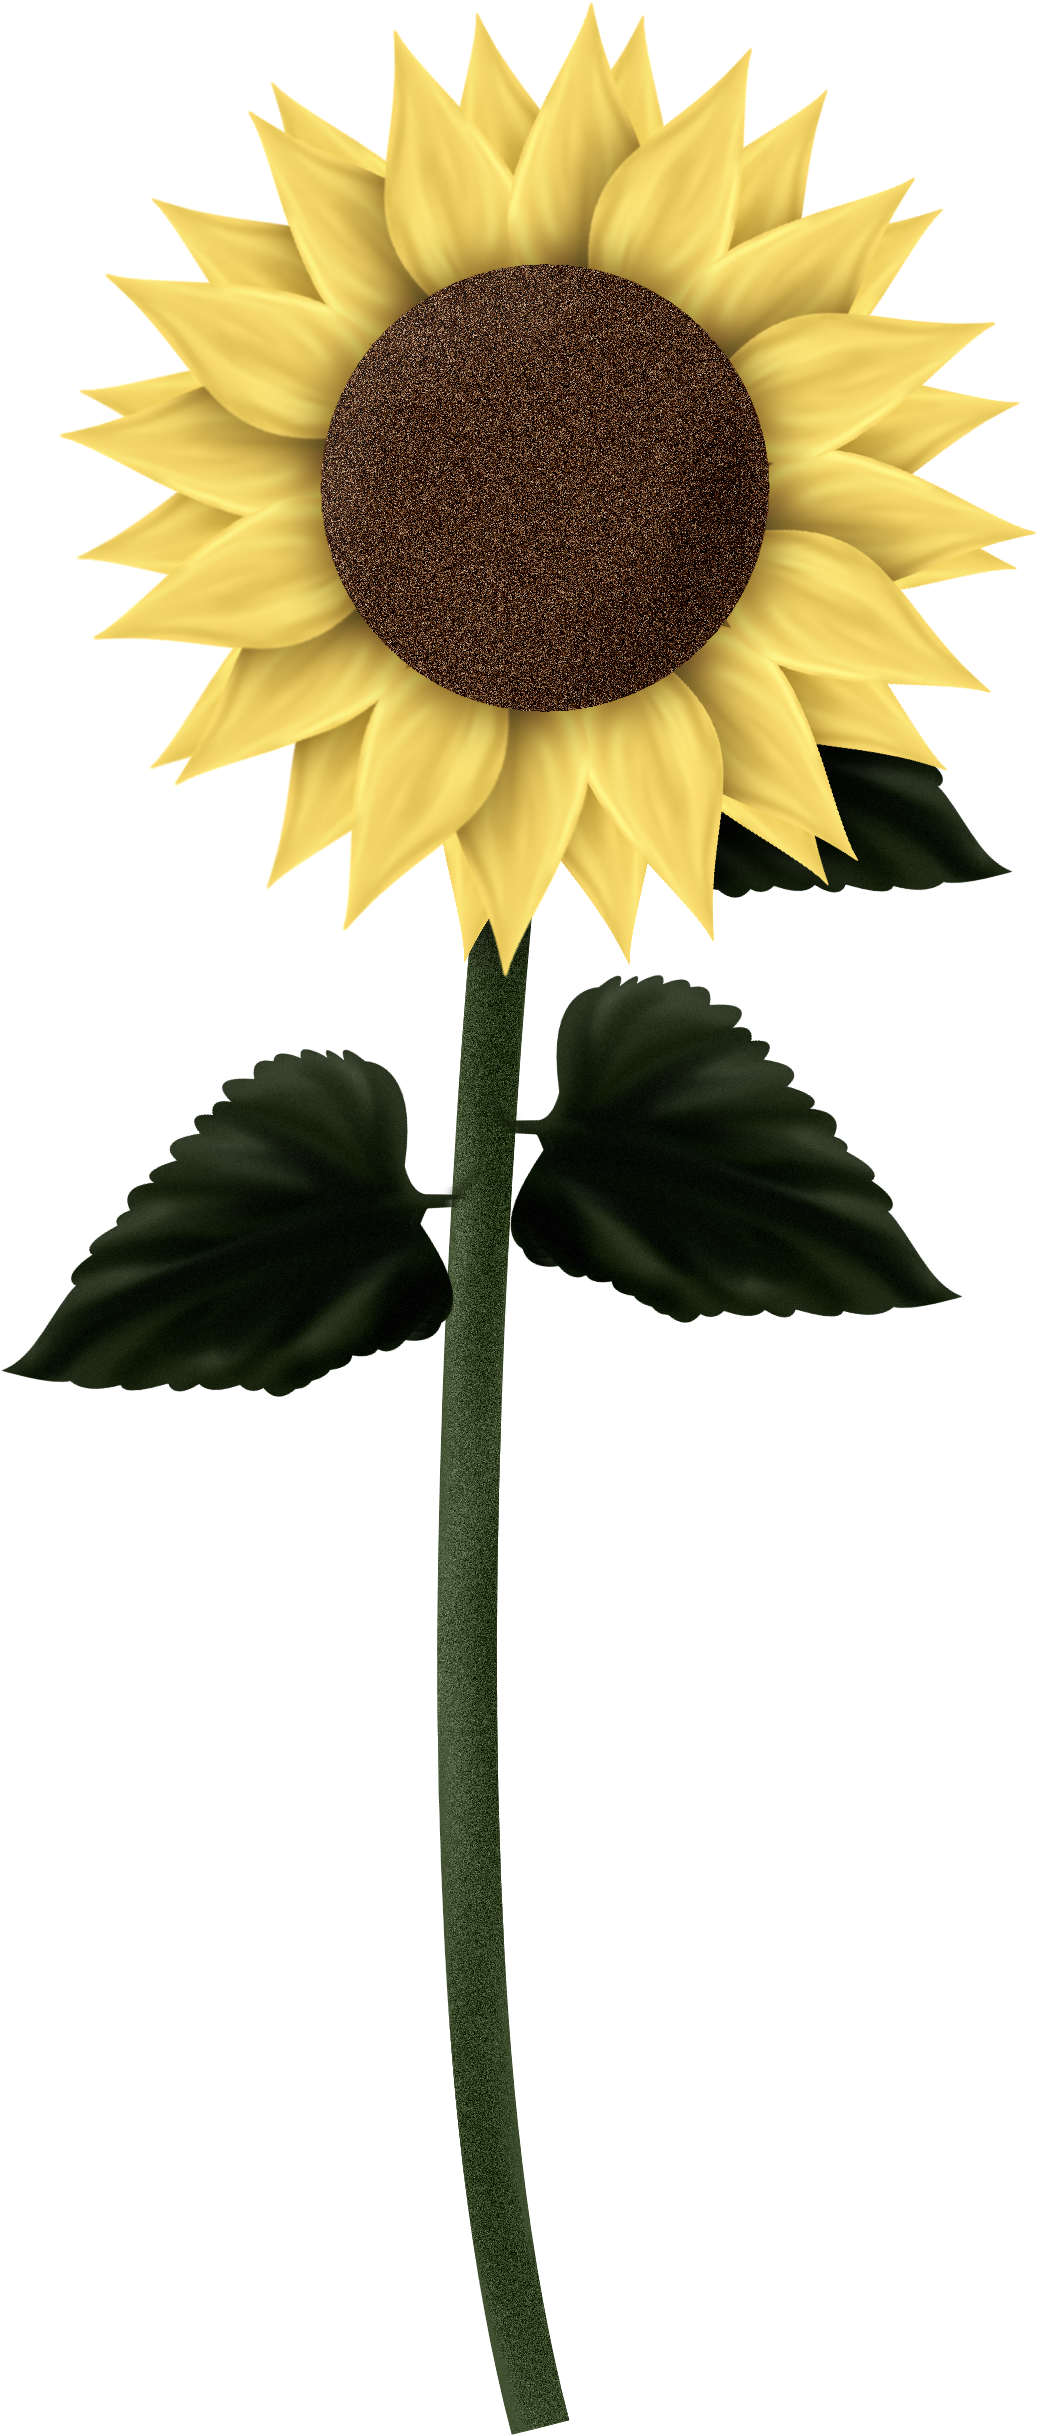 Sunflowers - Transparent Sunflower (2000x2600)